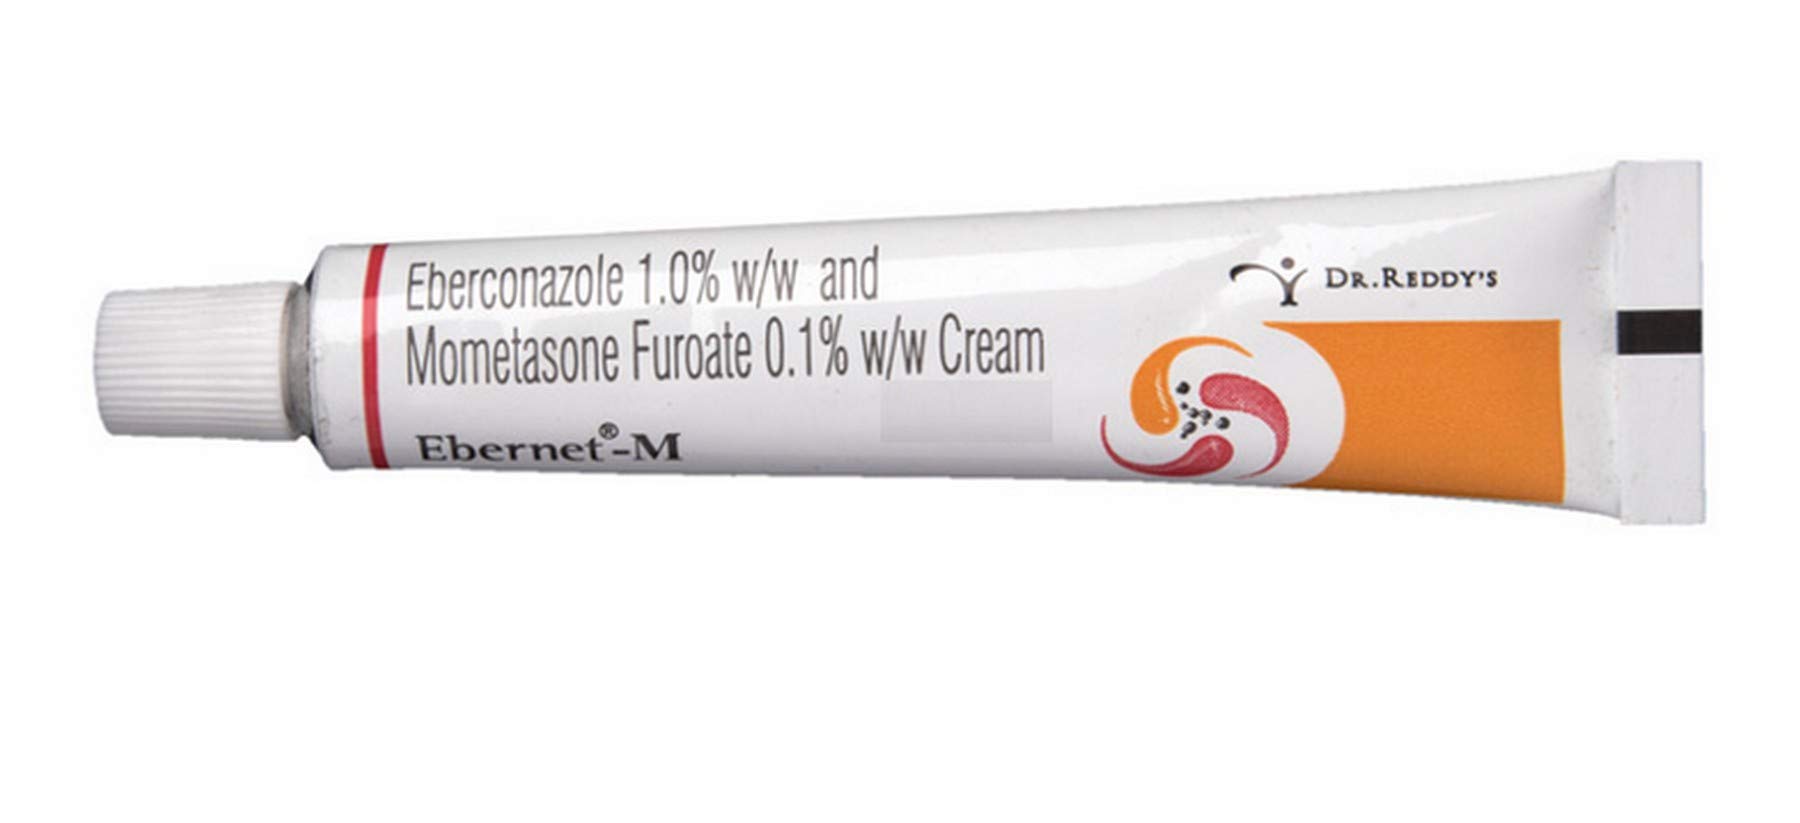 Eberconazole & Mometasone Furoate Cream